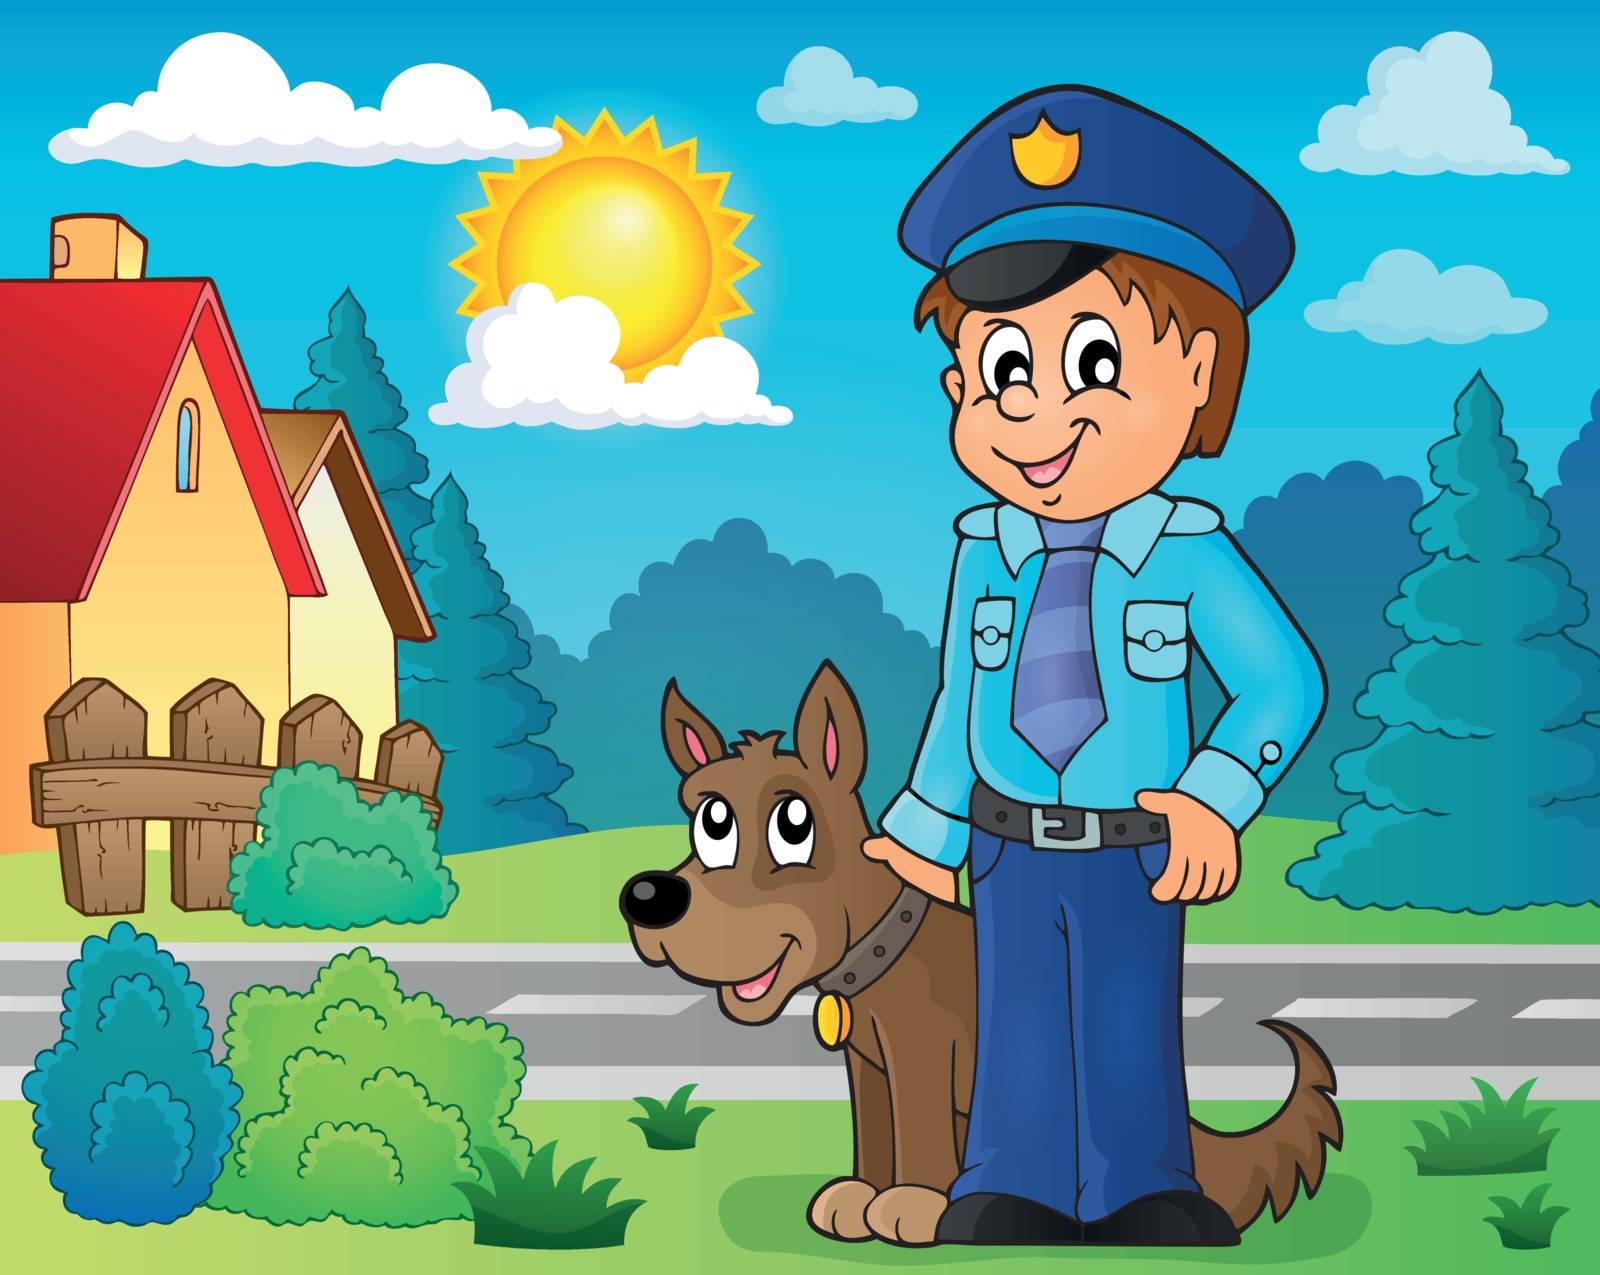 Policeman with guard dog image 3 - eps10 vector illustration.